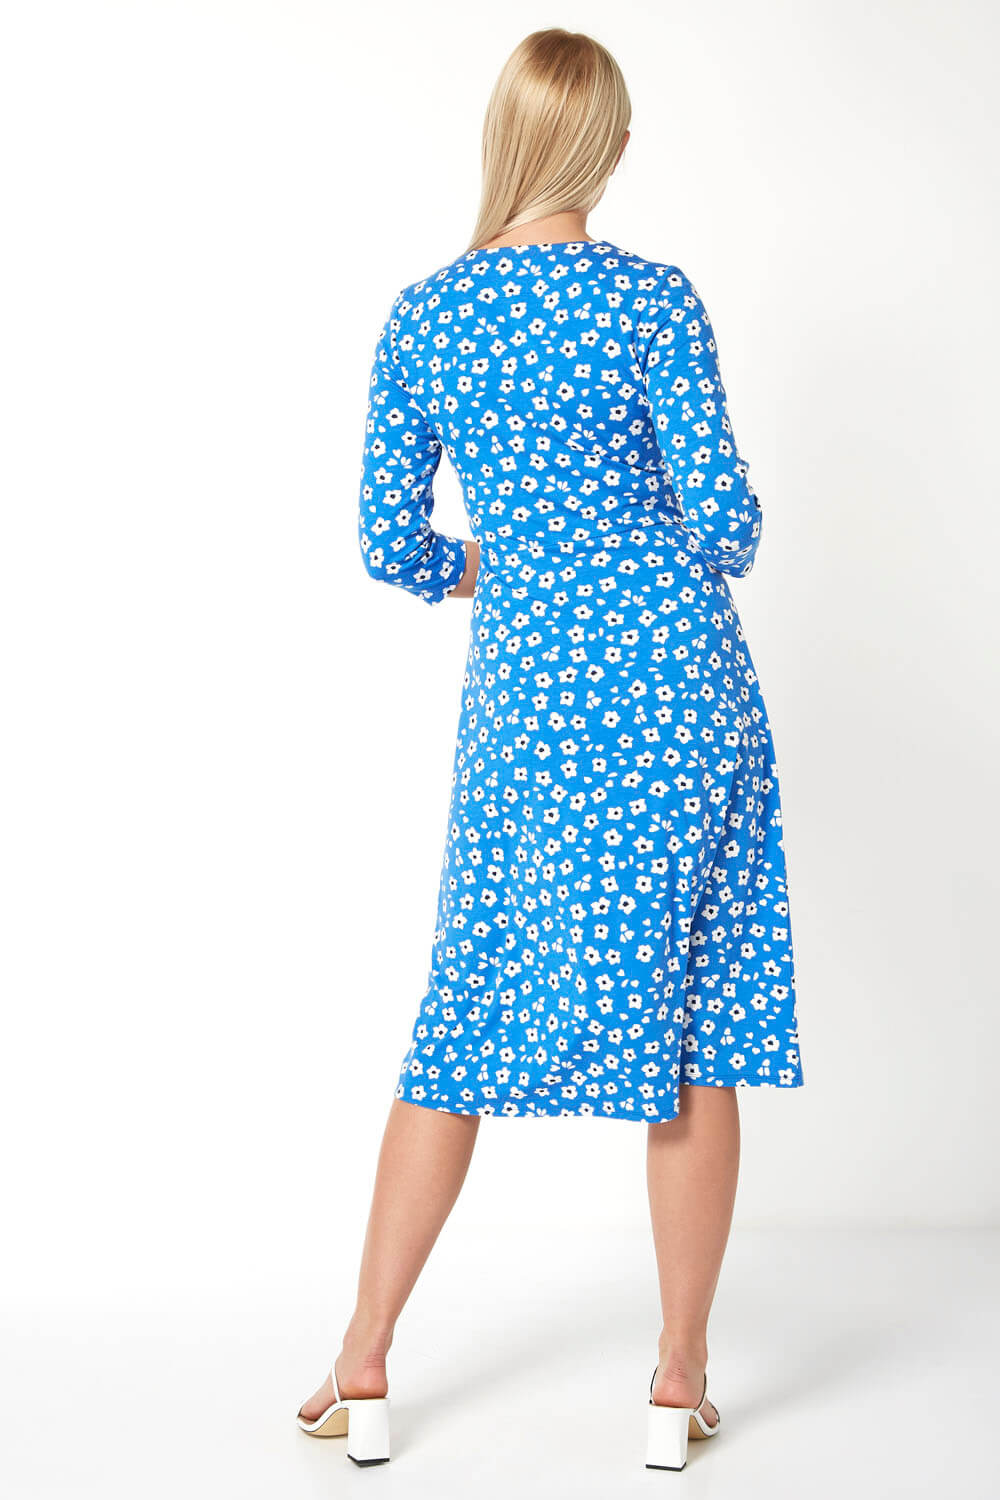 Blue Floral Print Midi Length Tea Dress, Image 2 of 4